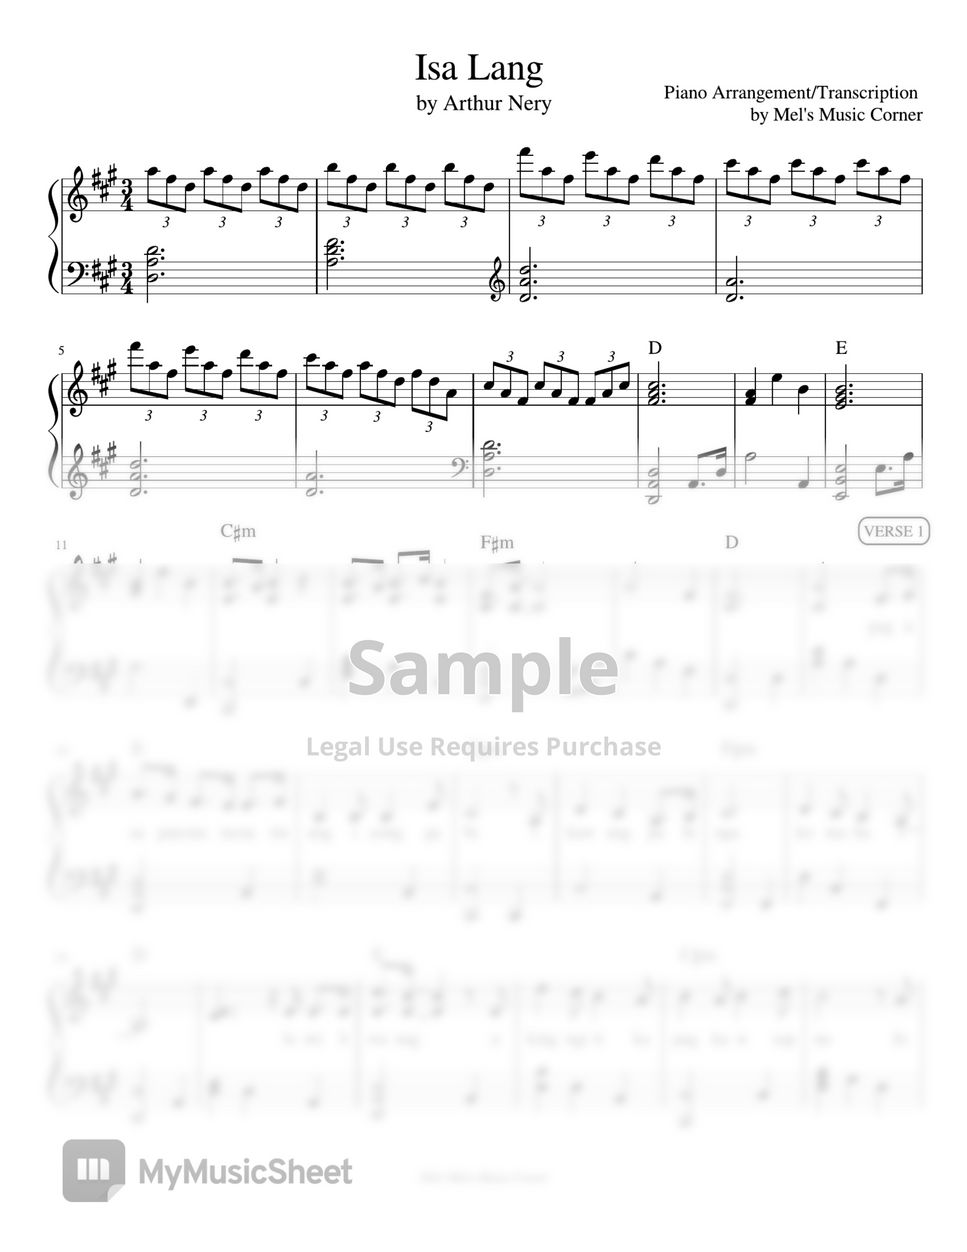 Arthur Nery - Isa Lang (piano sheet music) by Mel's Music Corner